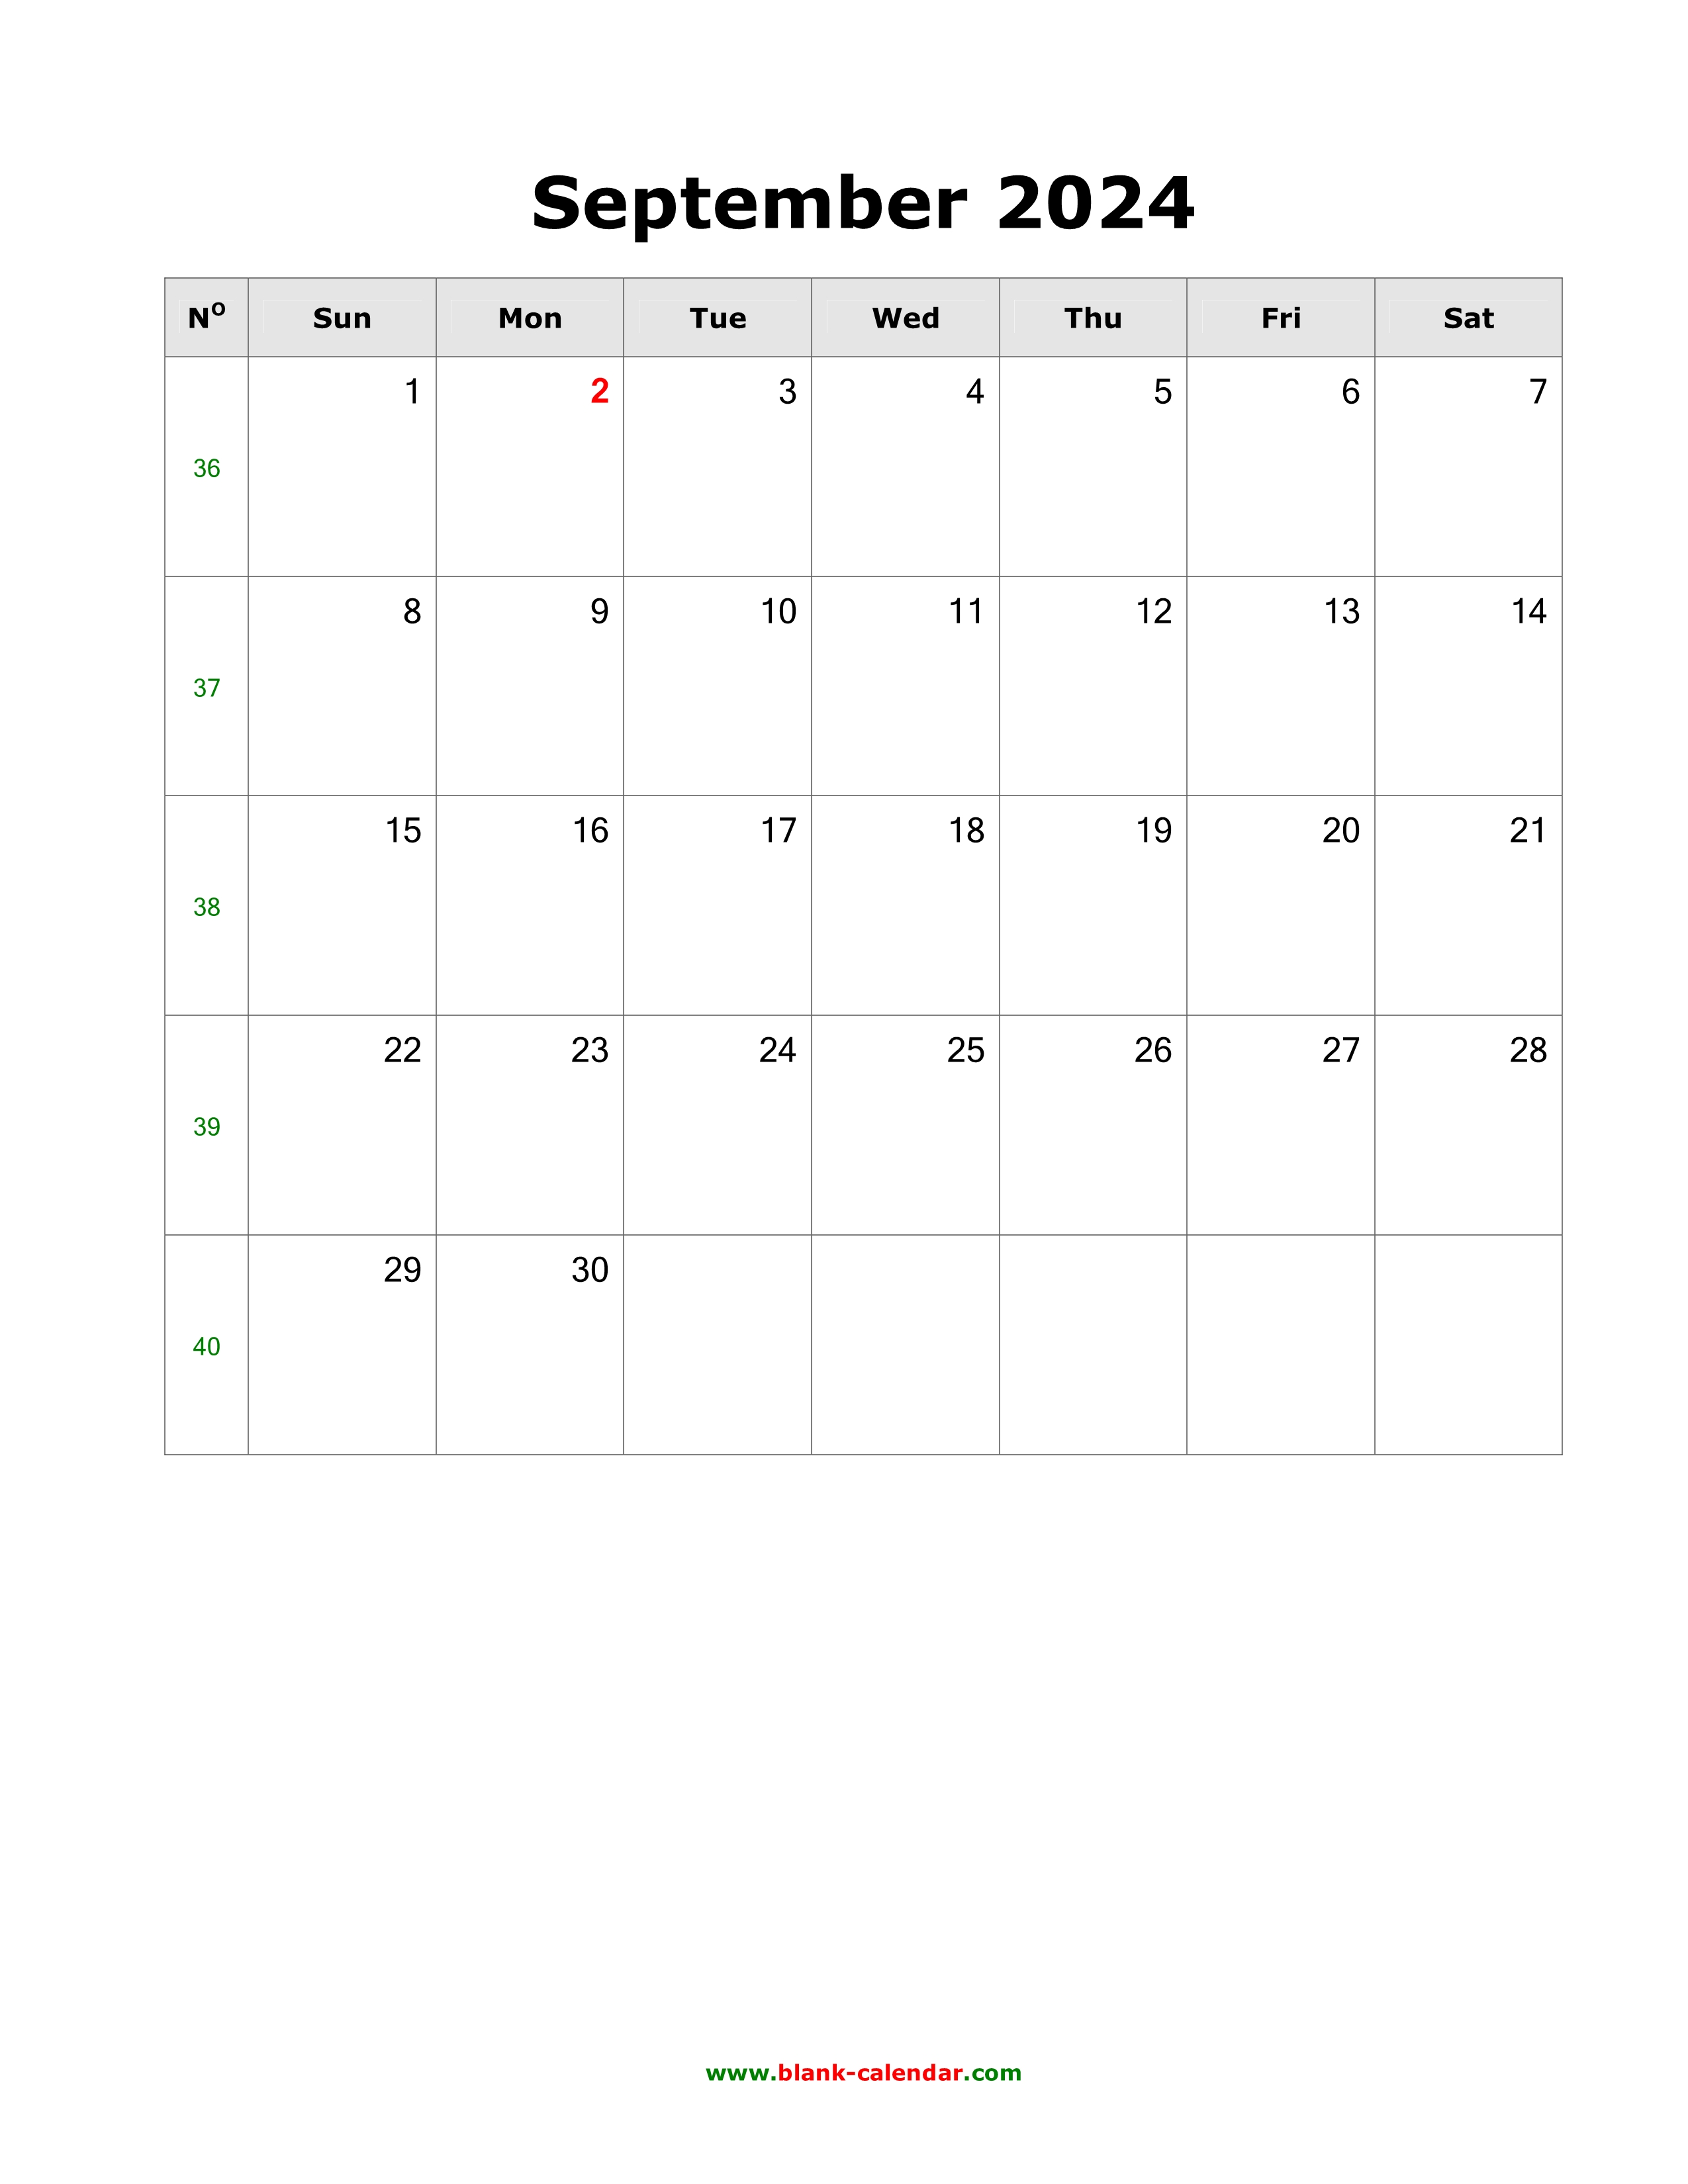 Download September 2024 Blank Calendar (vertical)